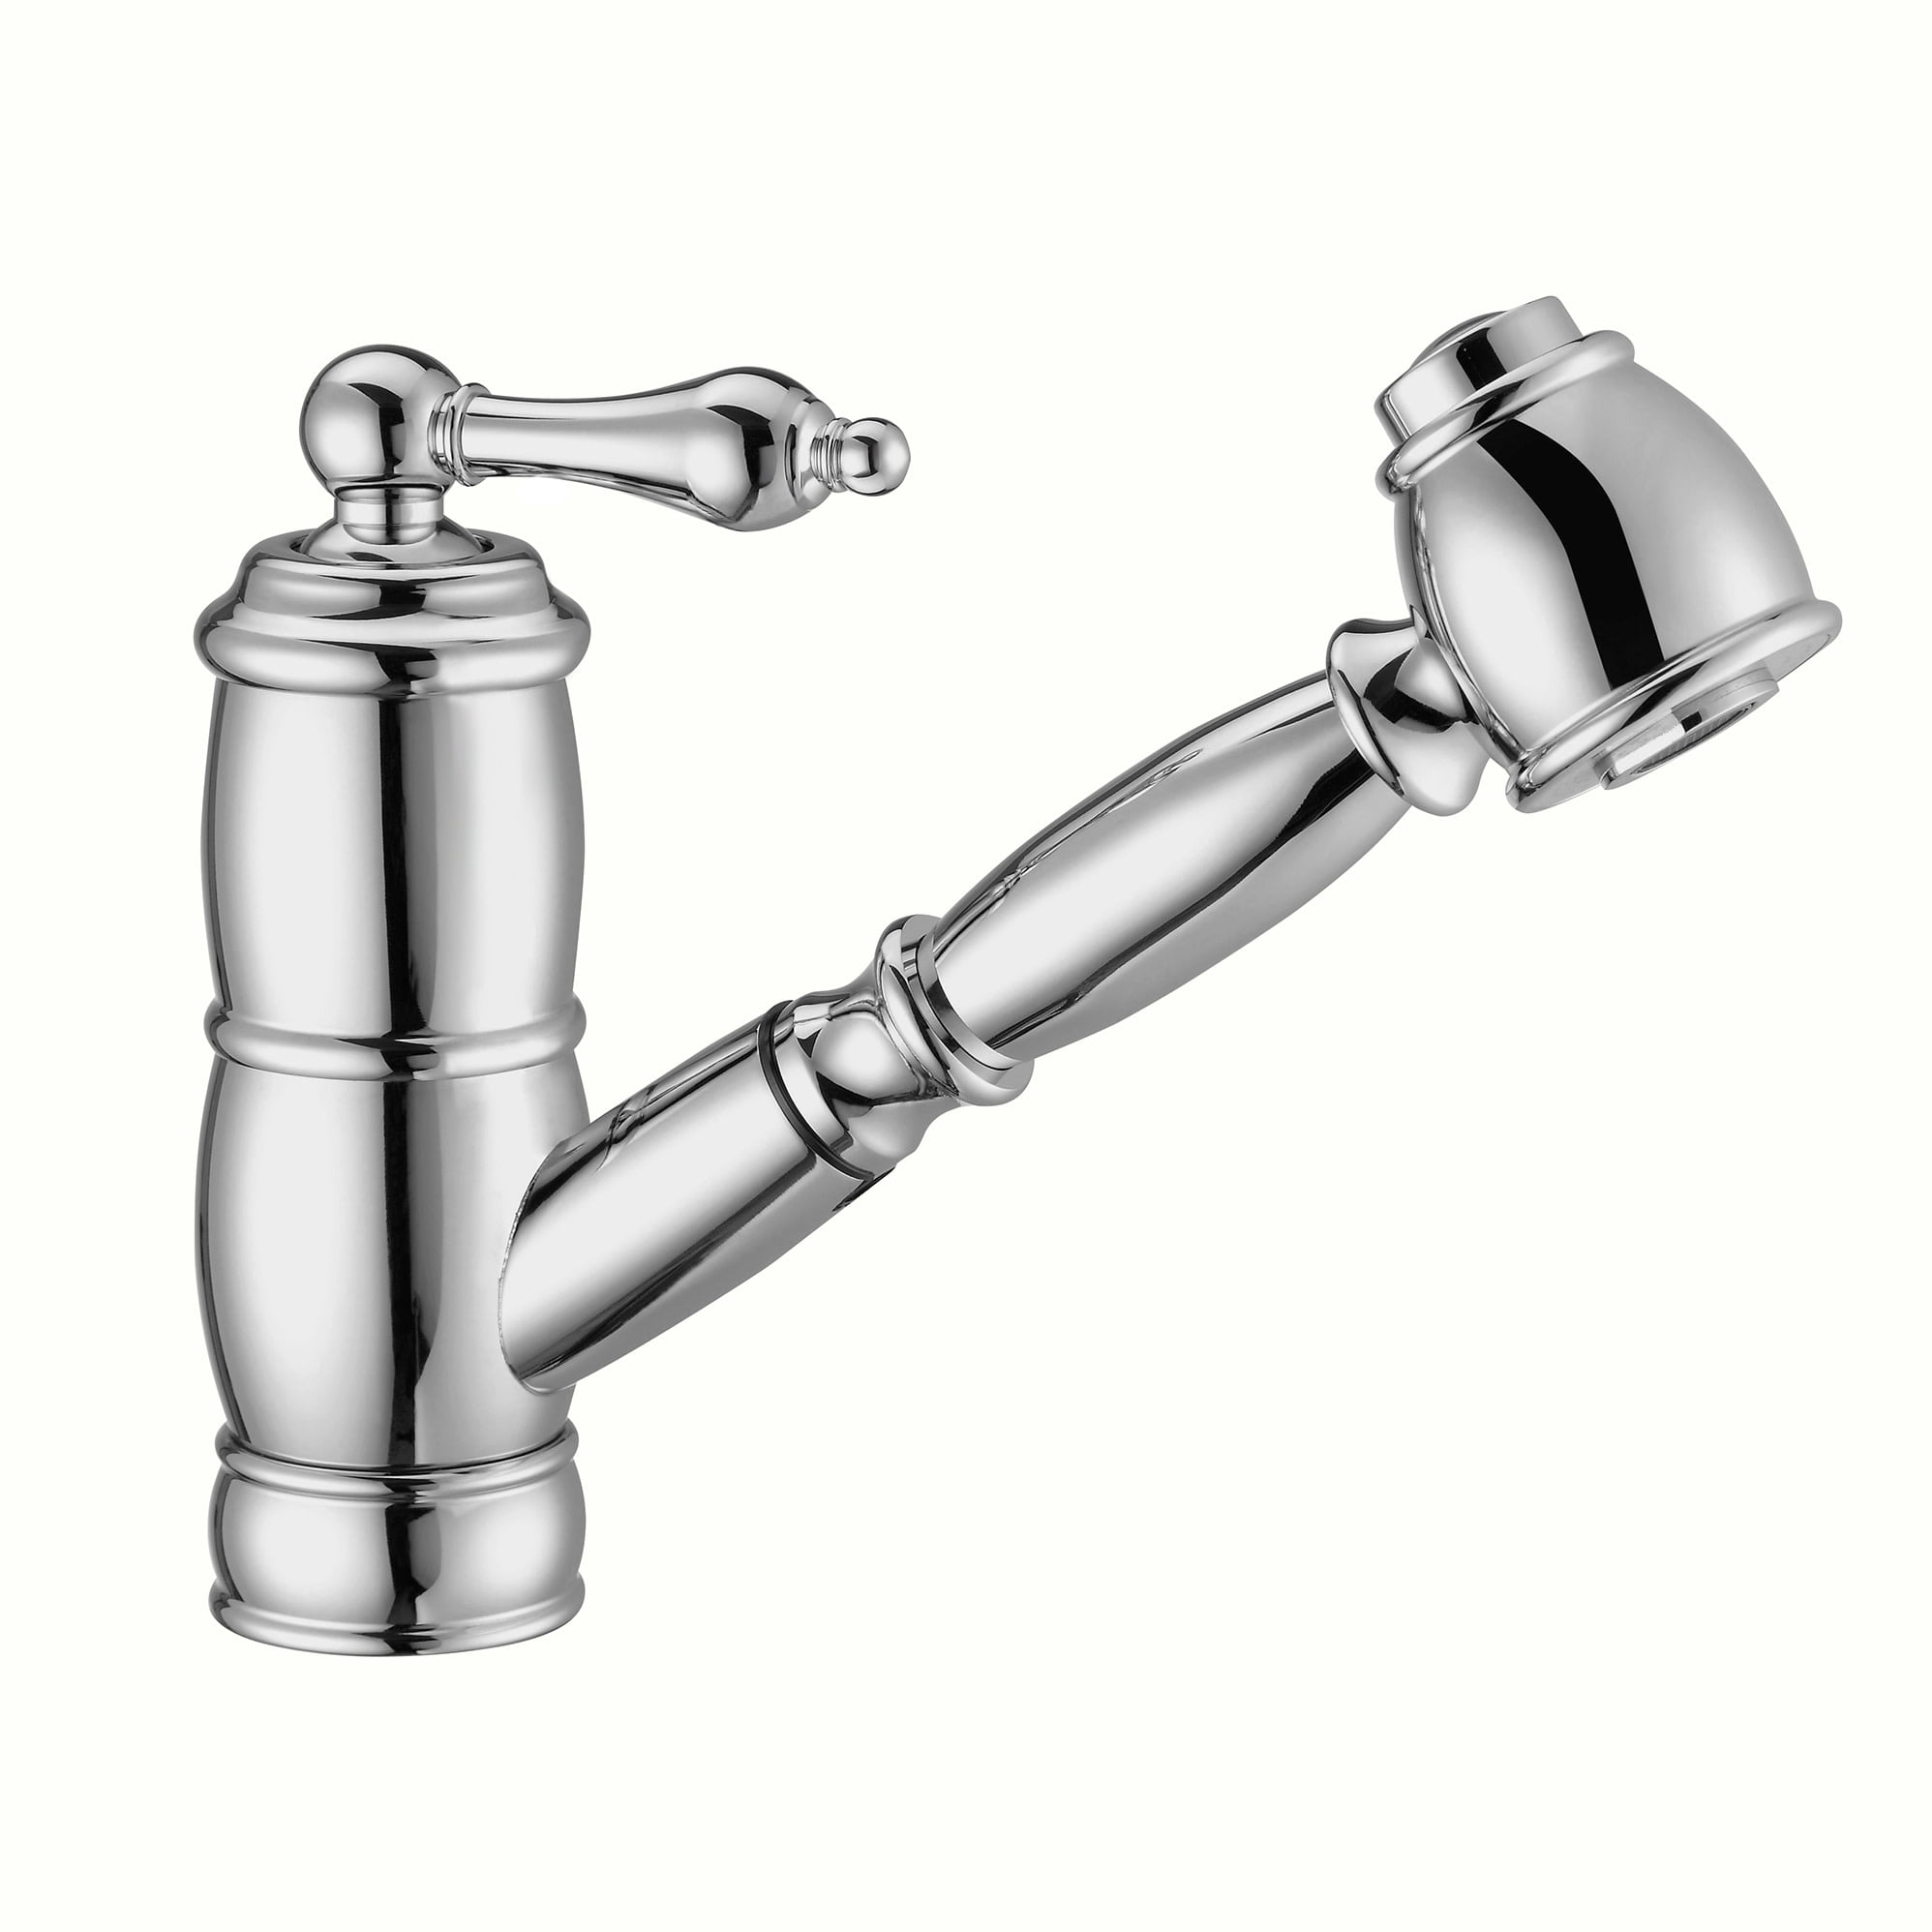 Whkpsl3-2222-nt-c Vintage Iii Plus Single Hole & Single Lever Faucet With A Pull-out Spray Head - Polished Chrome